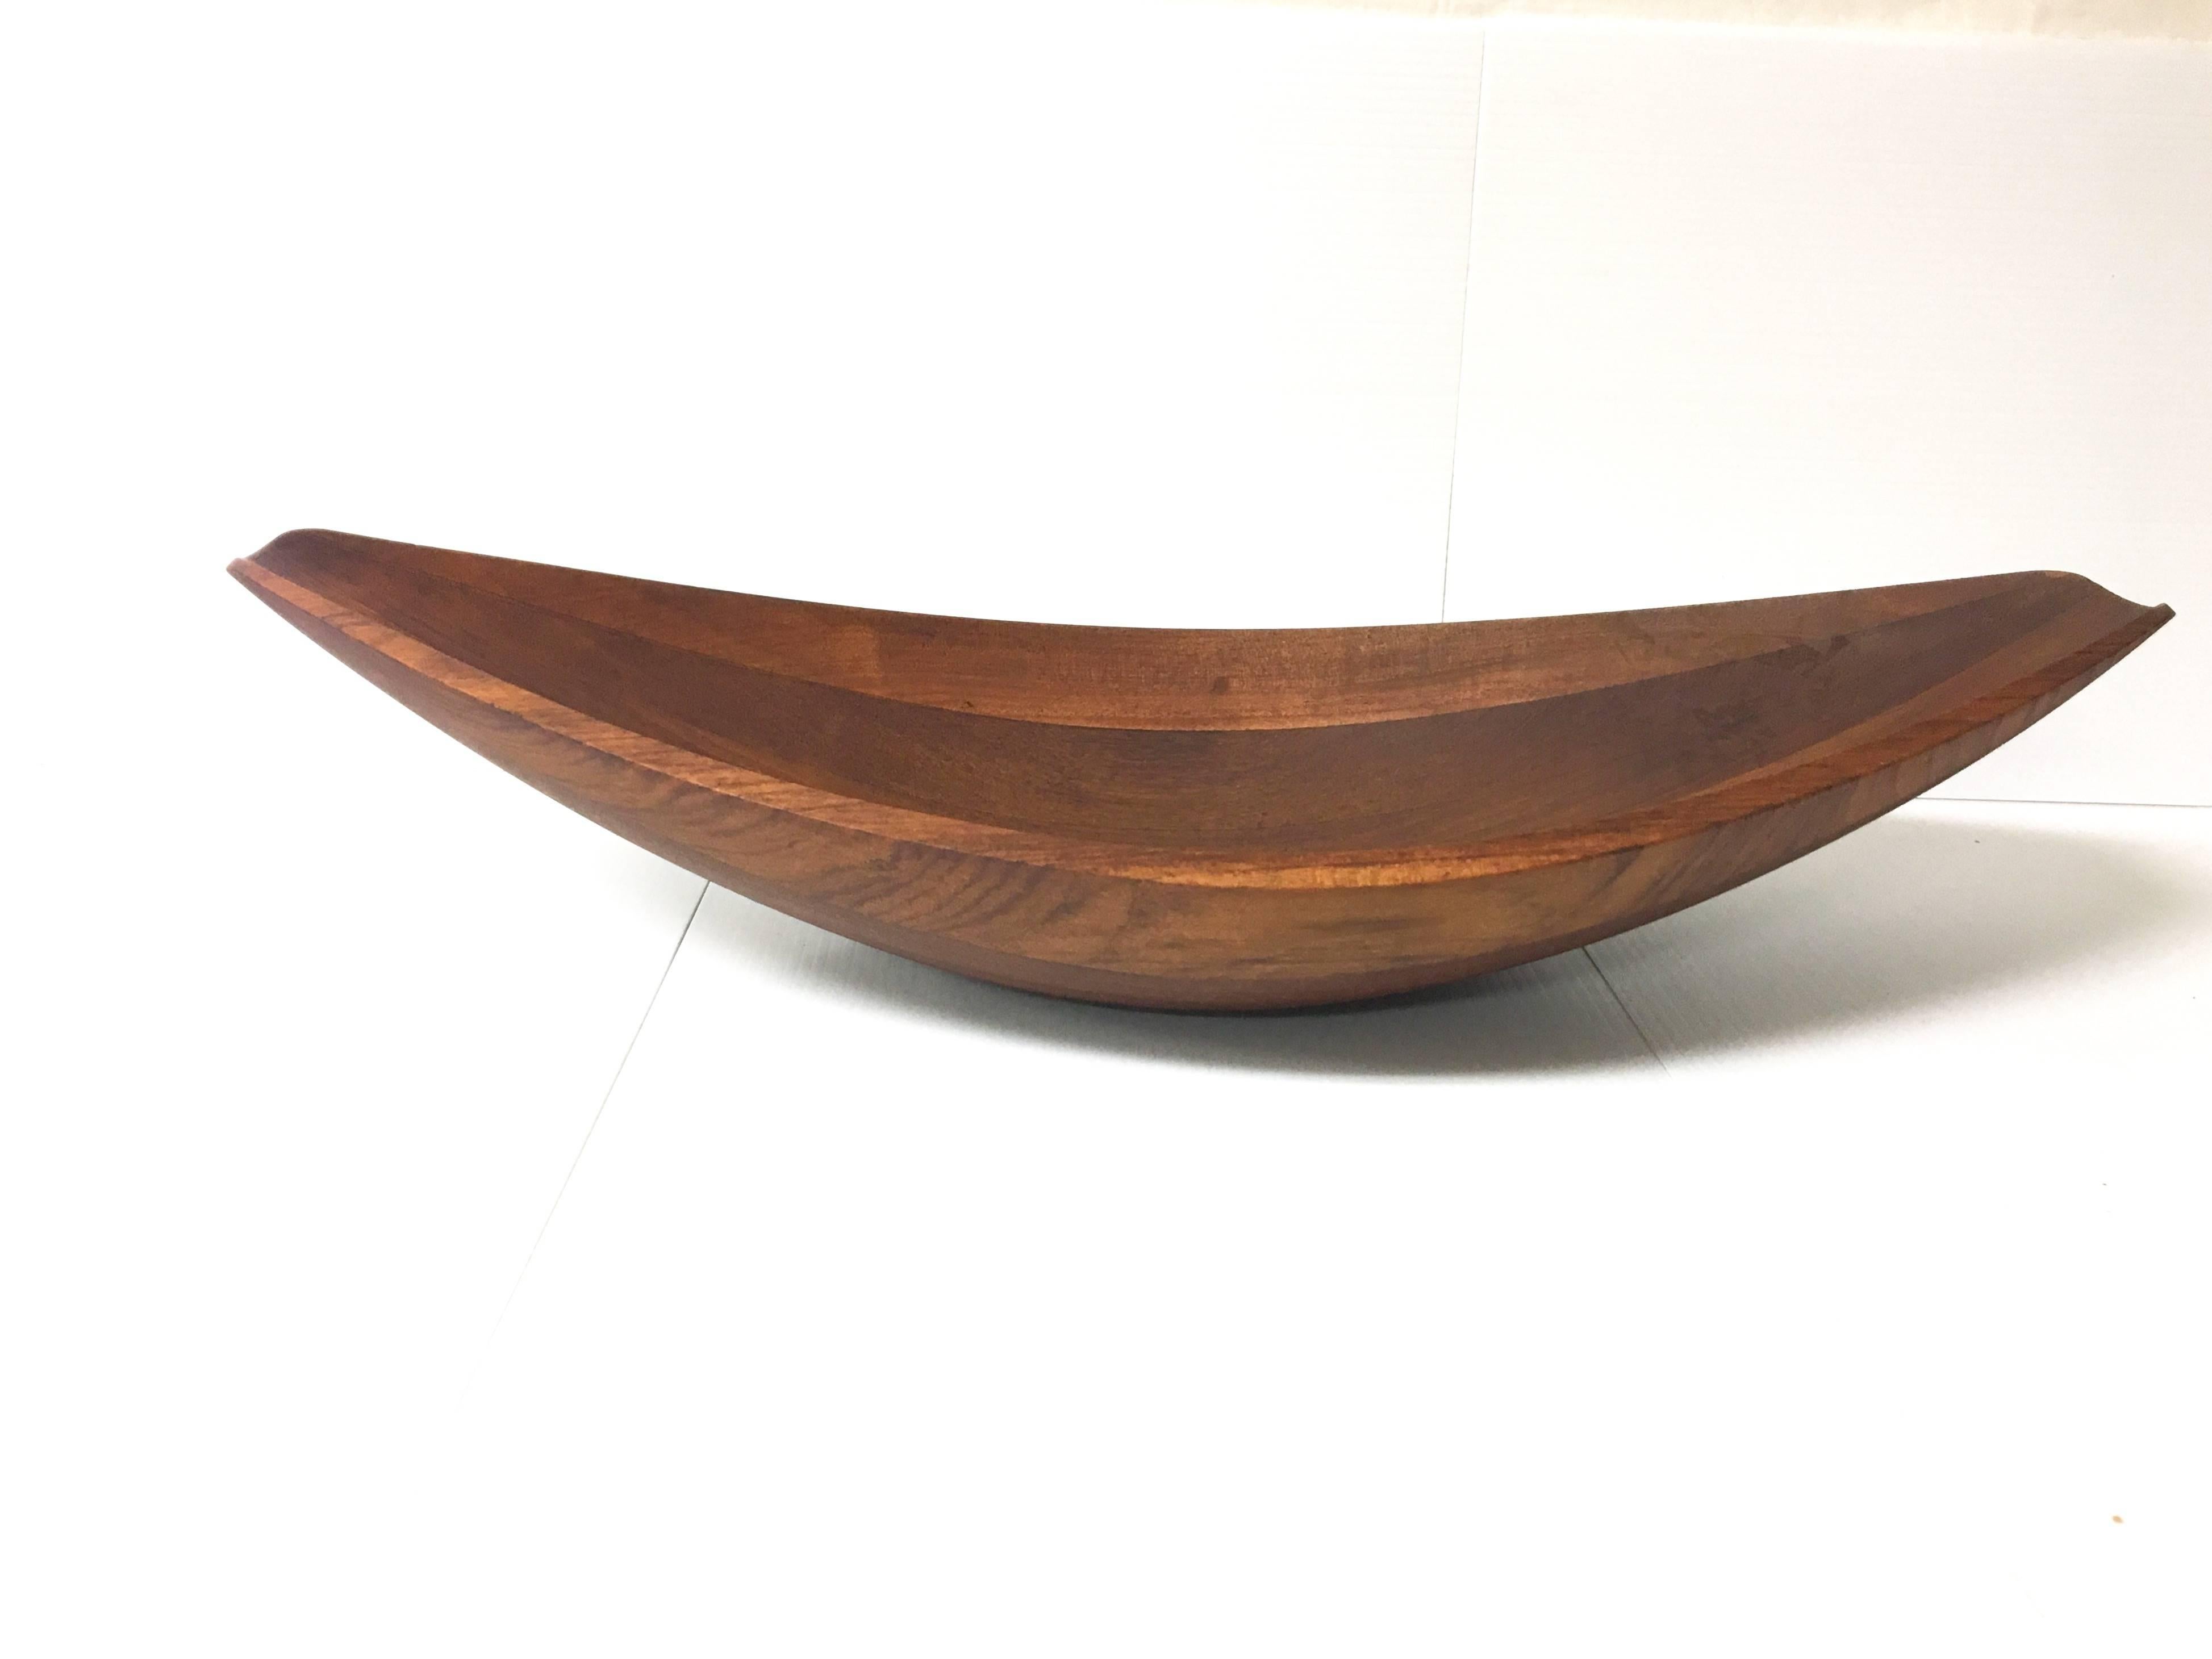 Scandinavian Modern Extra Large Staved Teak Canoe Bowl Designed by Quistgaard for Dansk Rare